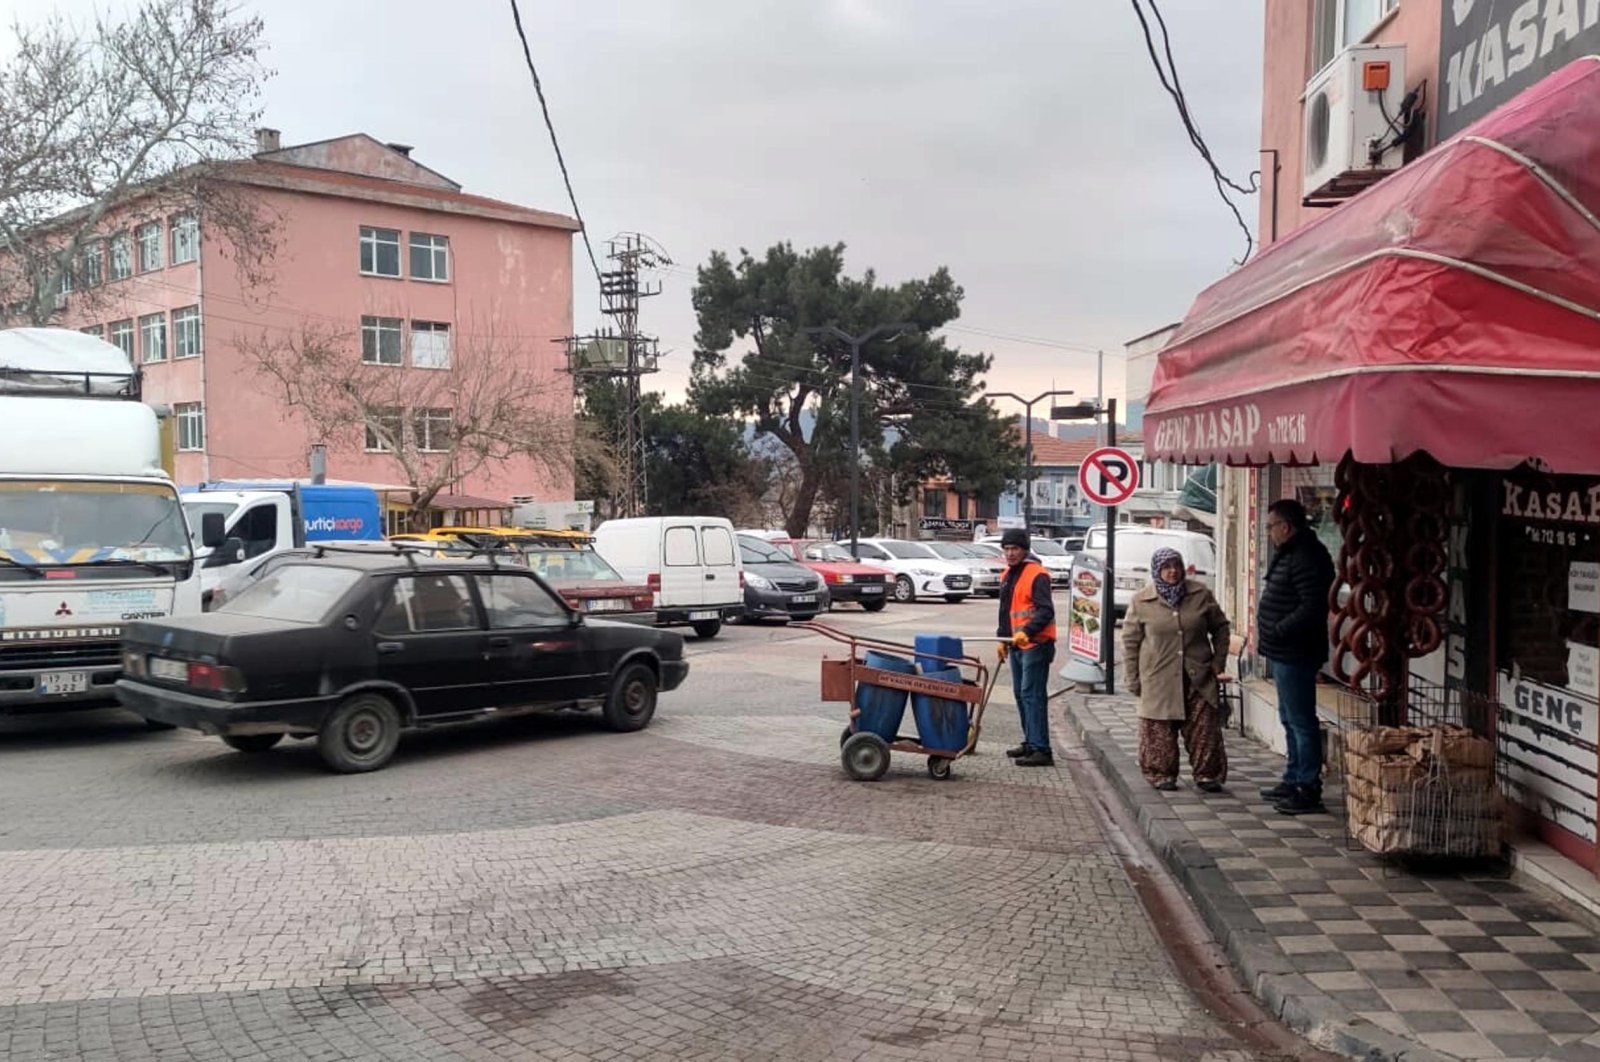 Gempa 5,0 mengguncang Aegean Türkiye, tidak ada korban yang dilaporkan